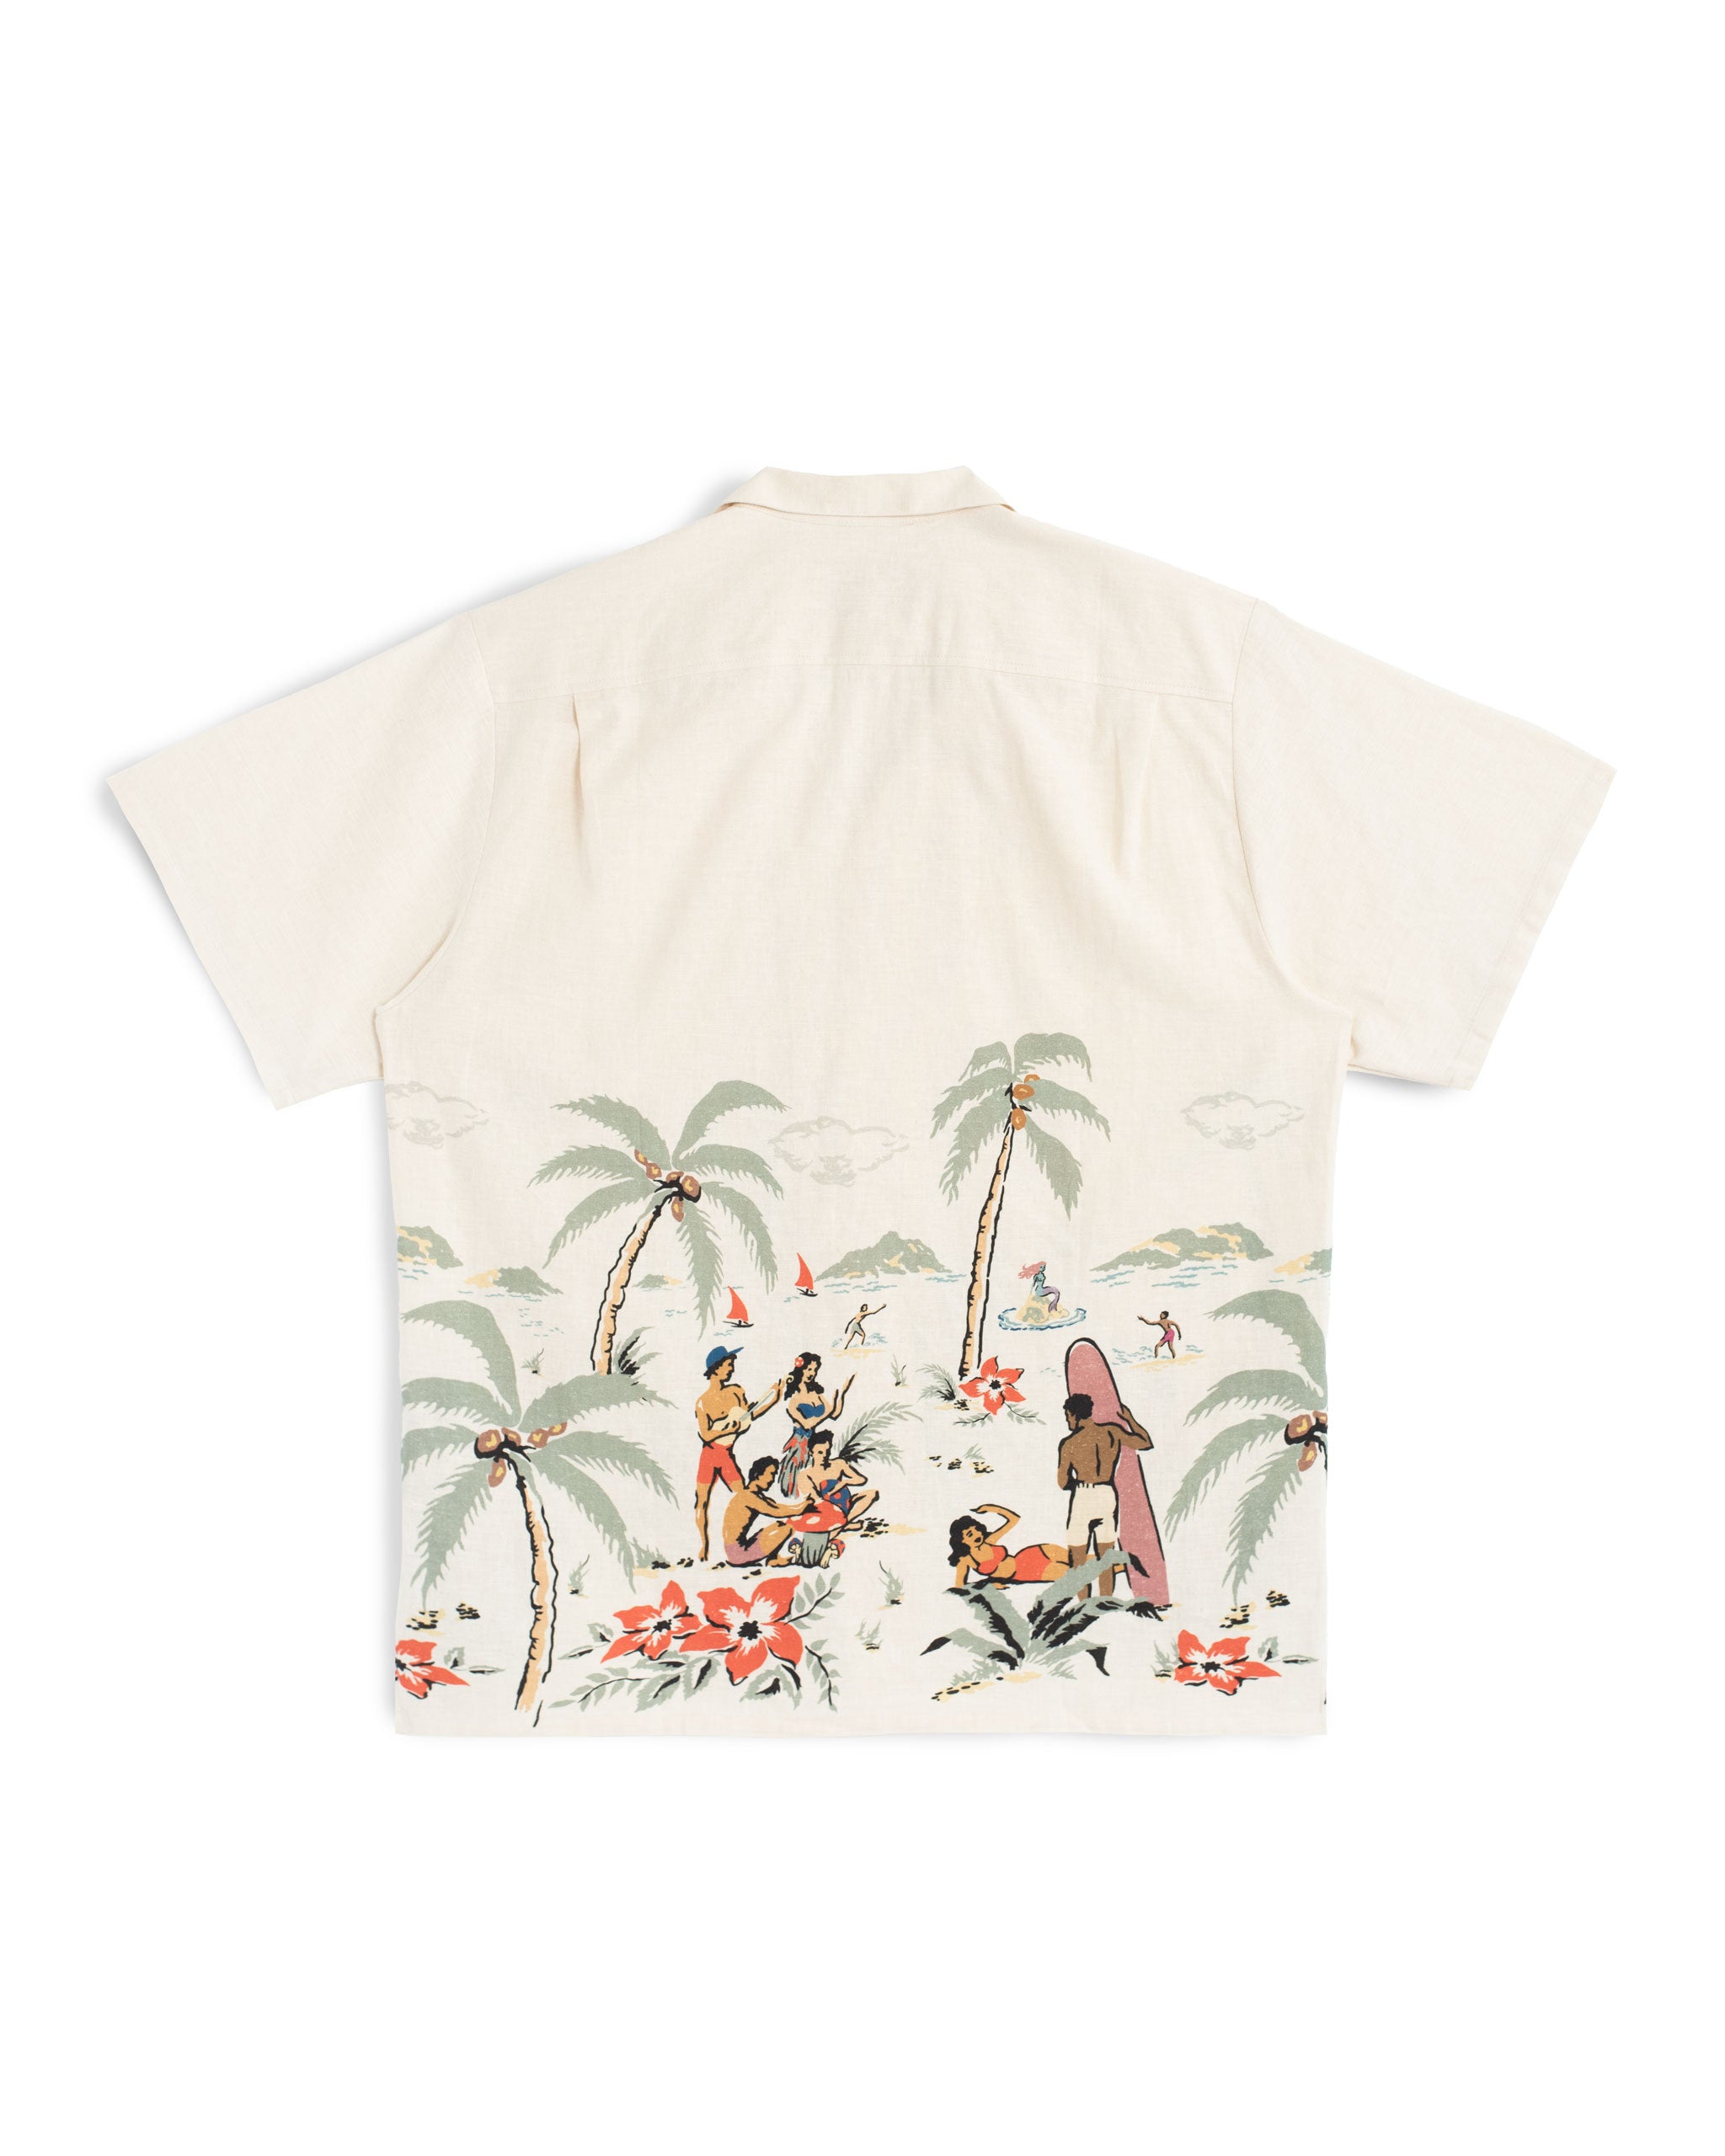 back shot of White linen camp shirt with a Hawaiian-inspired beach scene print